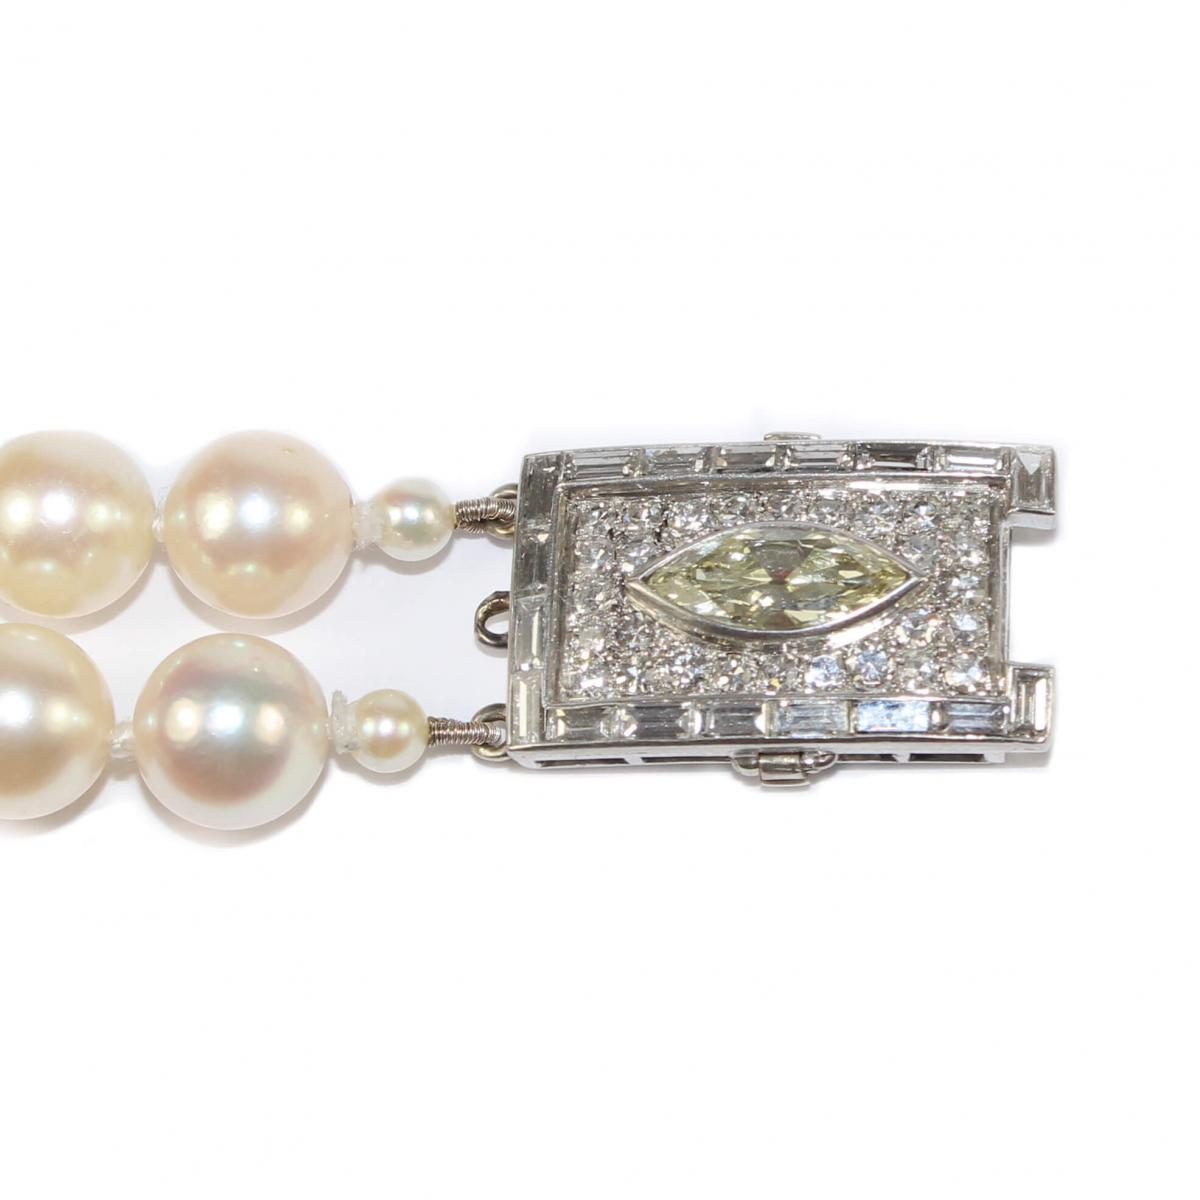 Art Deco Pearl Necklace - Fancy Diamond Clasp c.1940